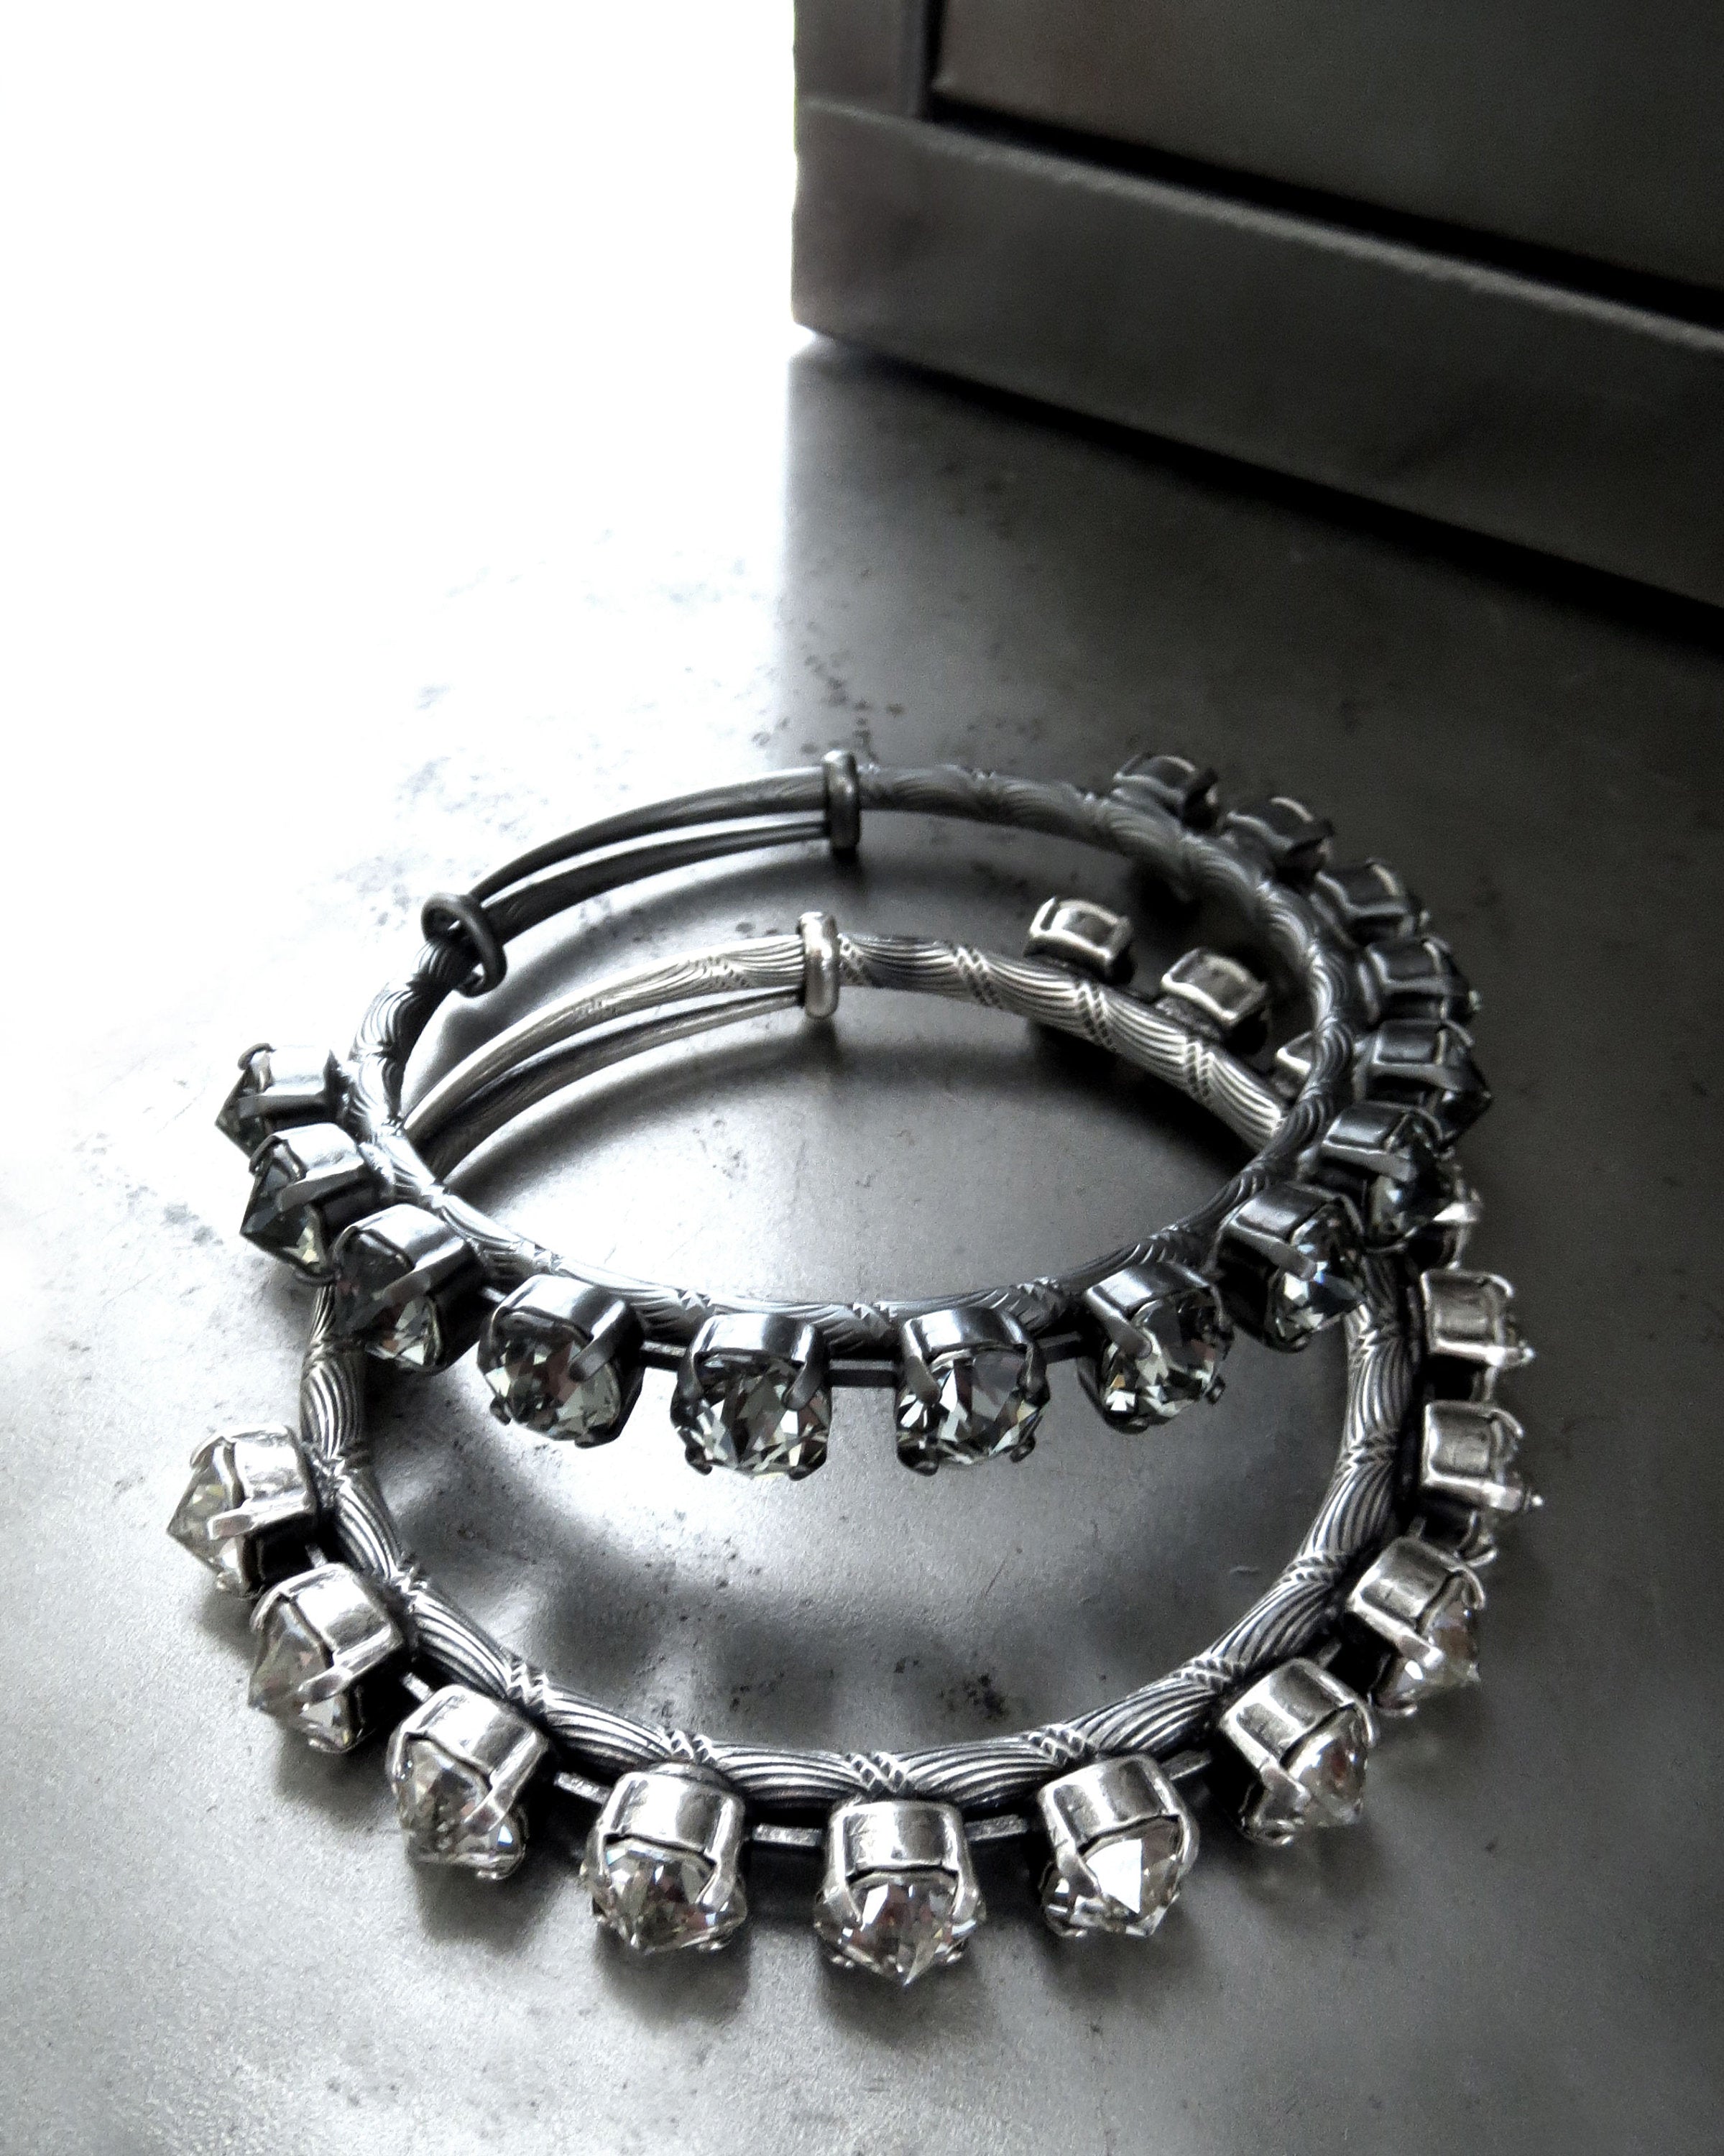 BOMBSHELL - Crystal Bangle Bracelet - Swarovski Crystal in Black Diamond or Warm Silver Shade - Adjustable Bangle - Modern Crystal Jewelry